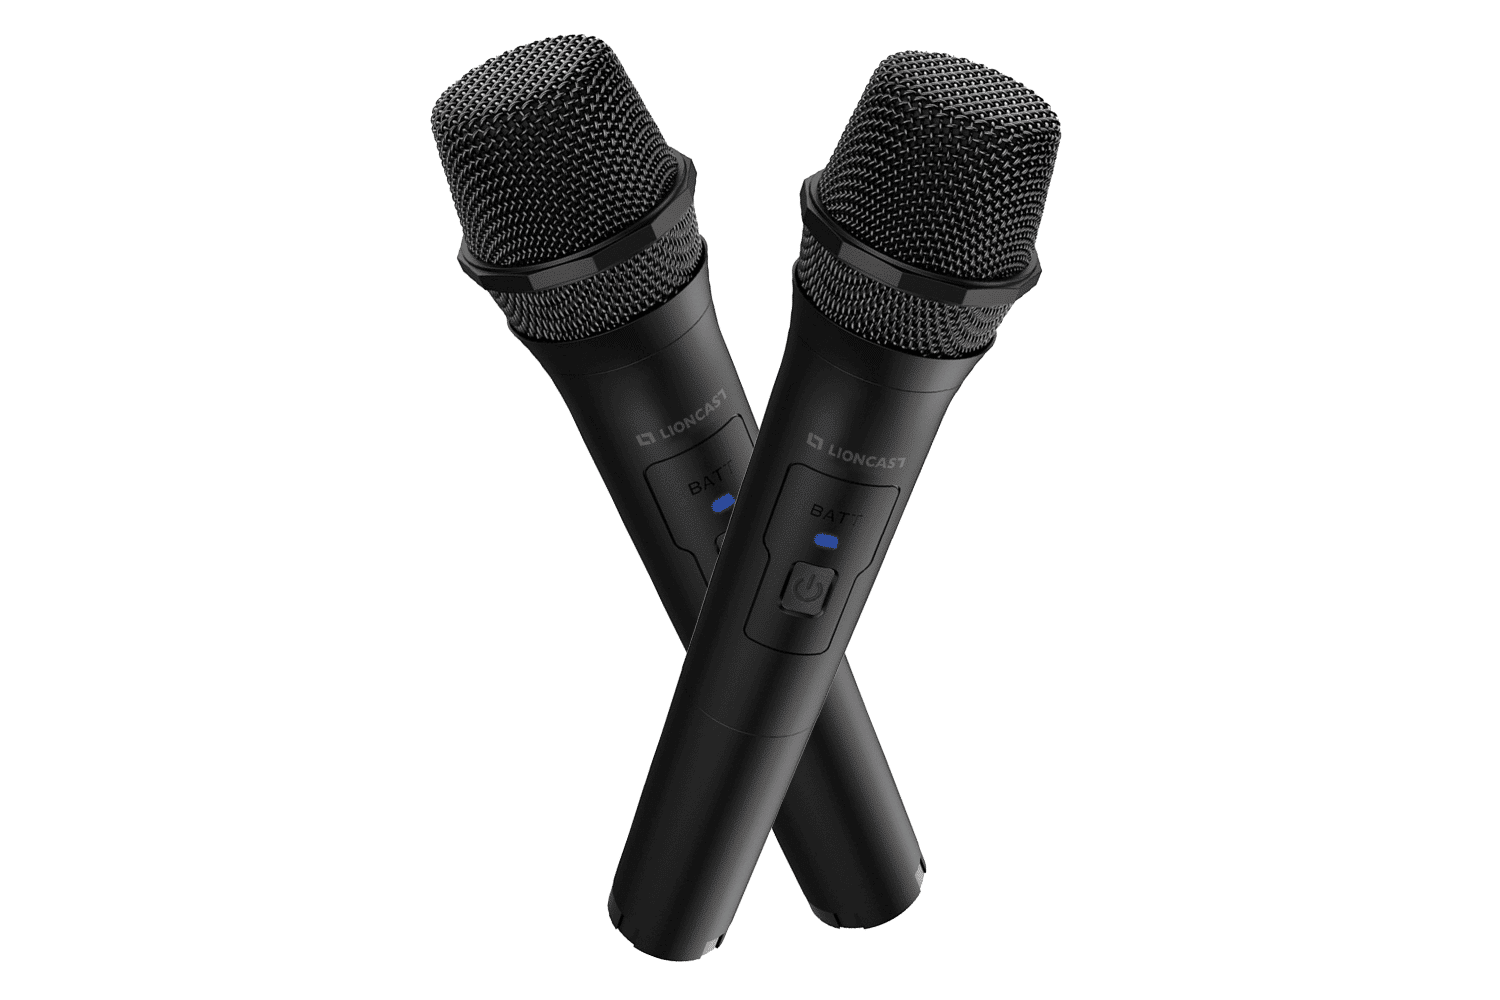 Lioncast Wireless Mikrofon für Karaoke (2er Set)